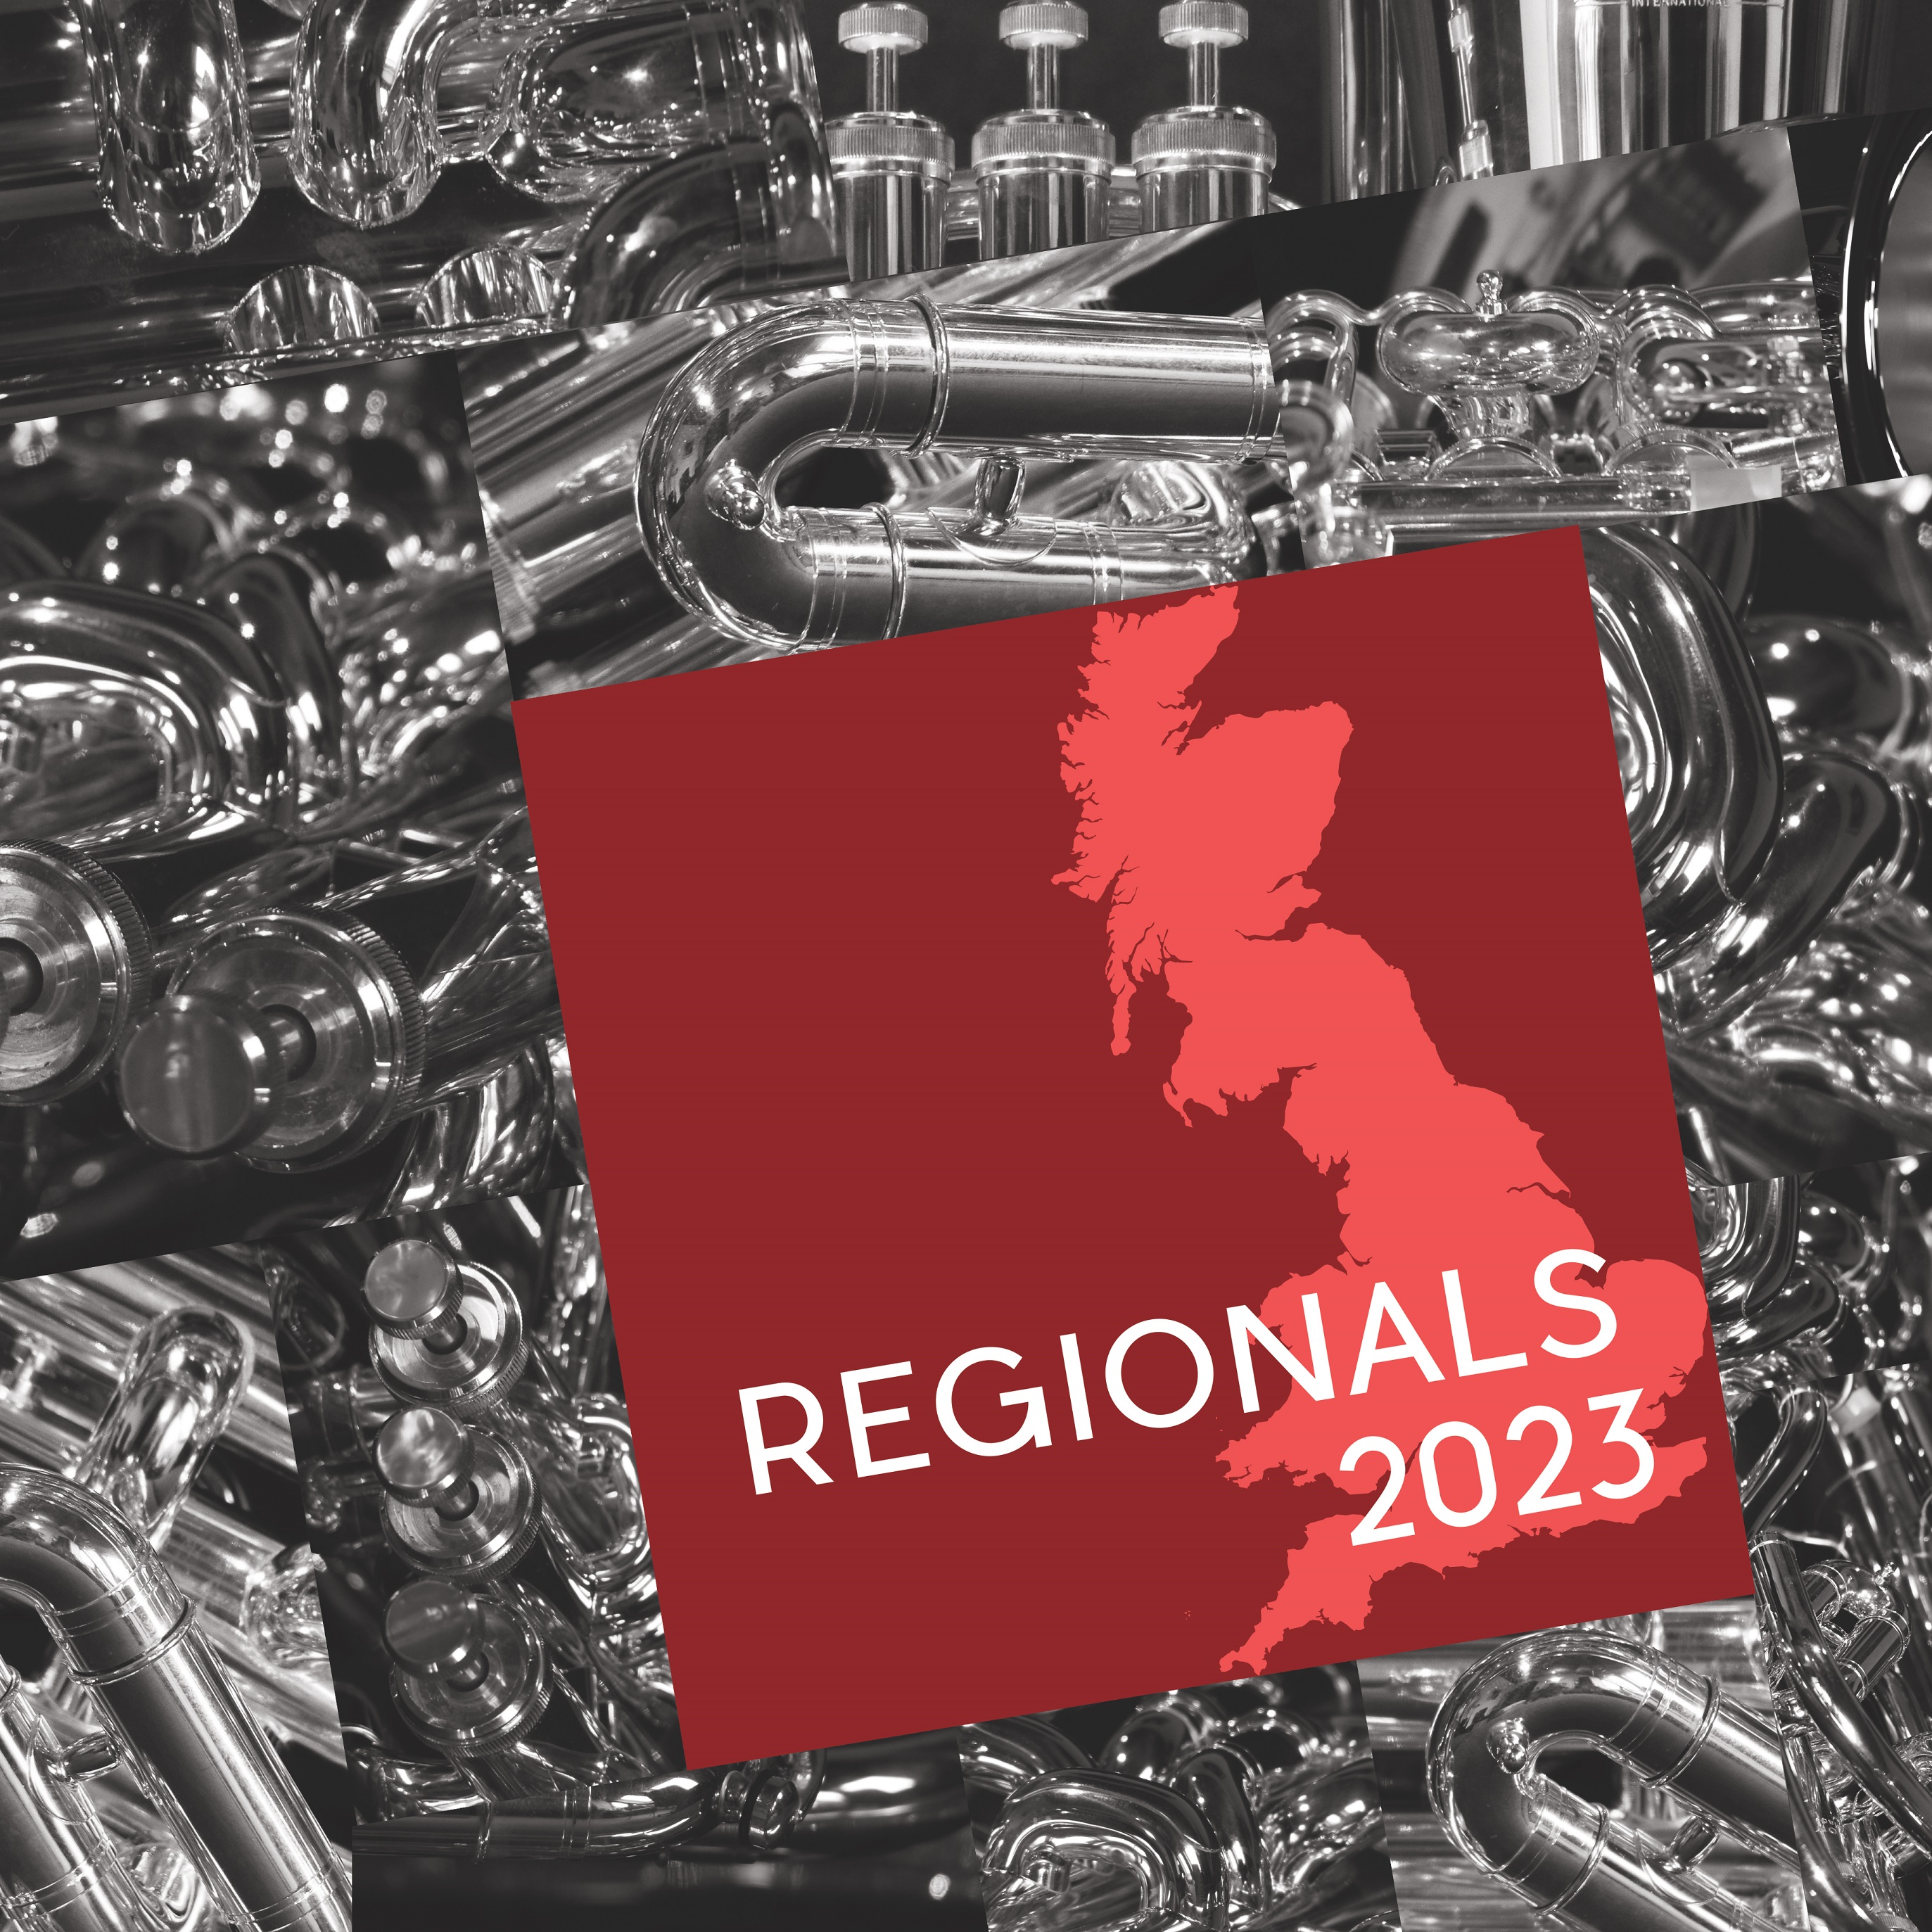 Regionals 2023 - Download